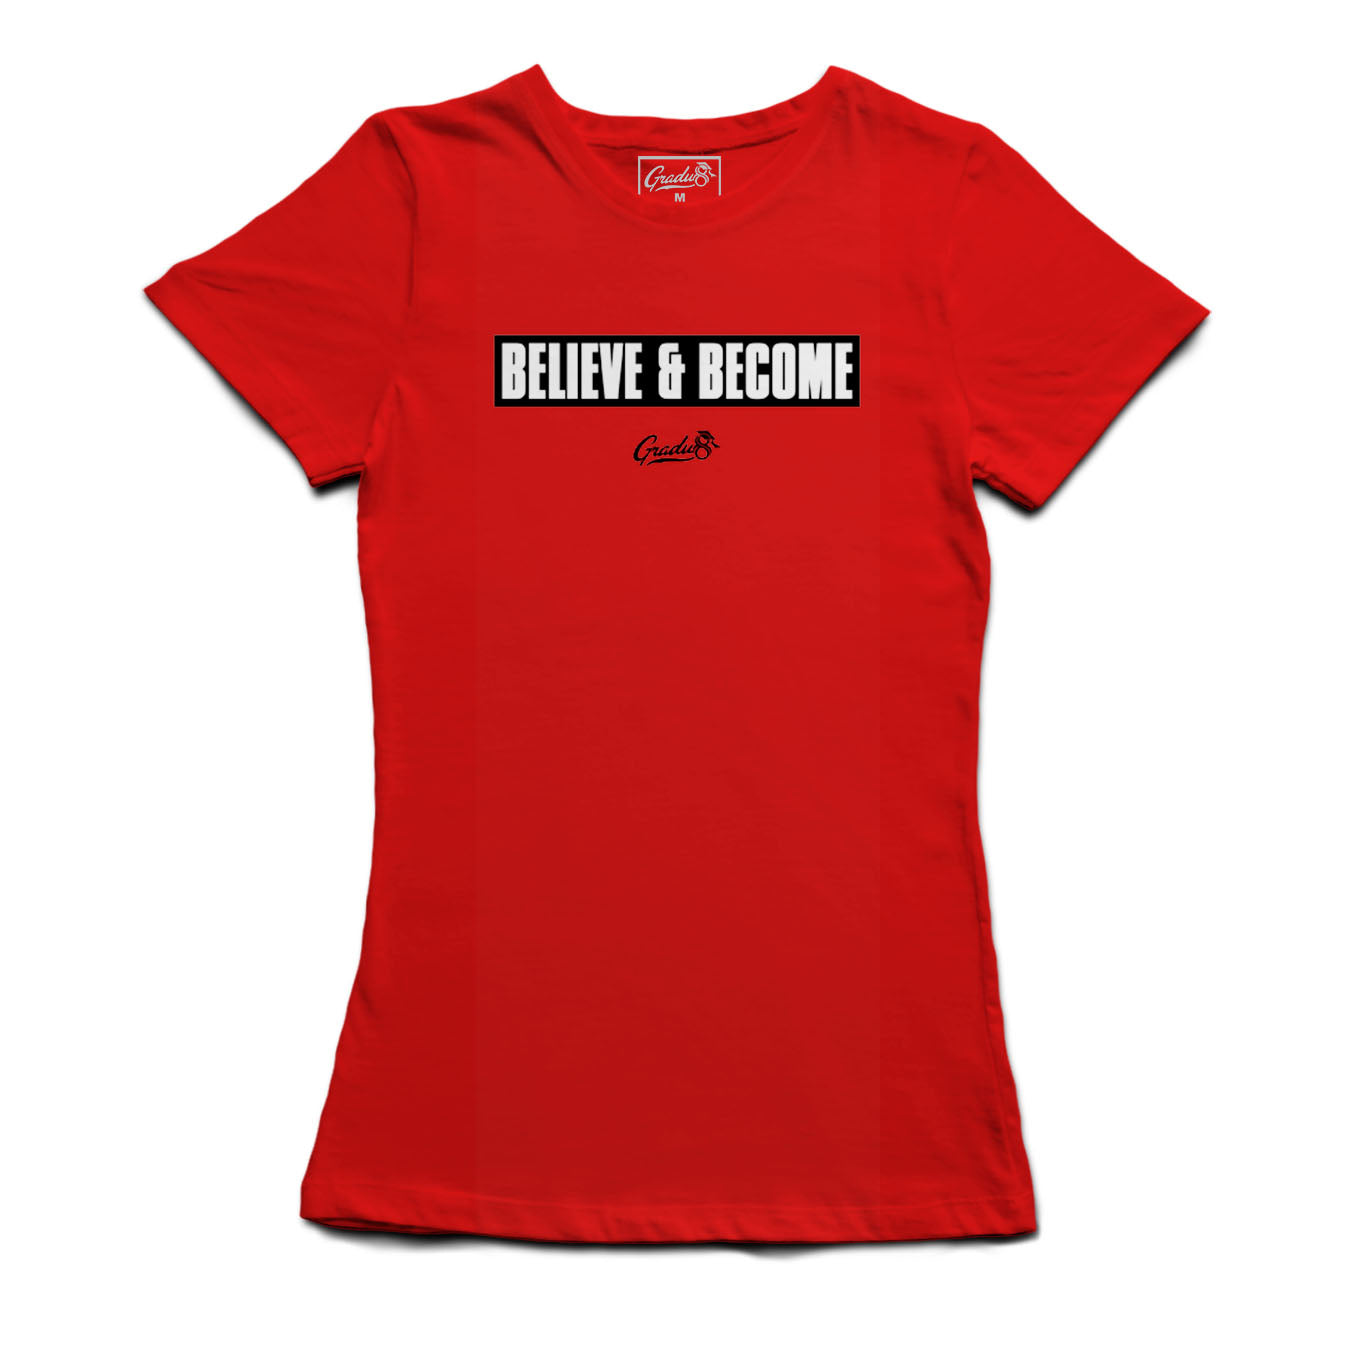 Women's Believe & Become Black Label Premium T-shirt - Red